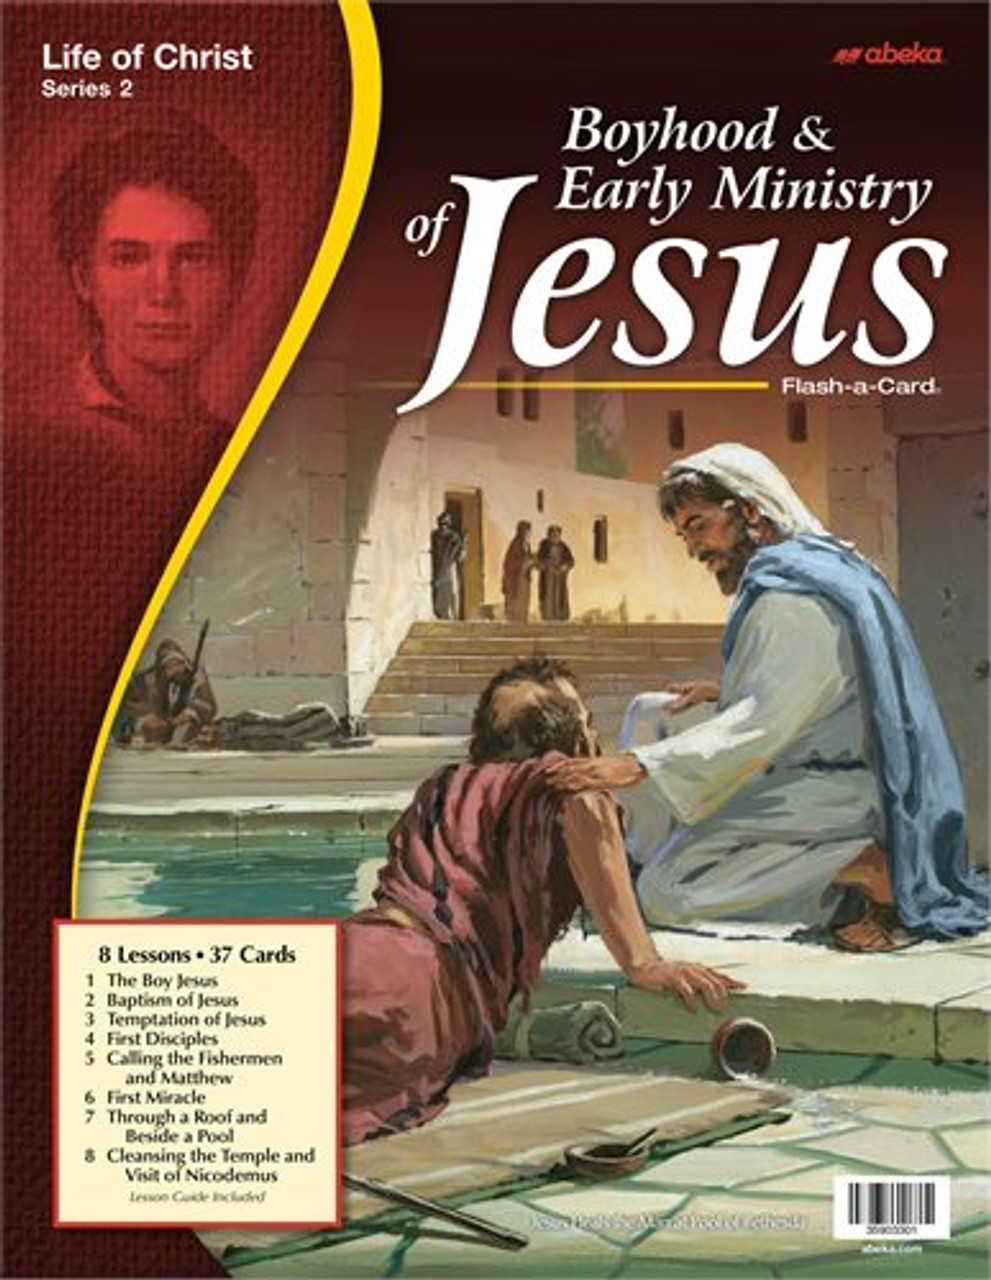 Boyhood & Early Ministry of Jesus, Life of Christ Series 2 (12x15.5)